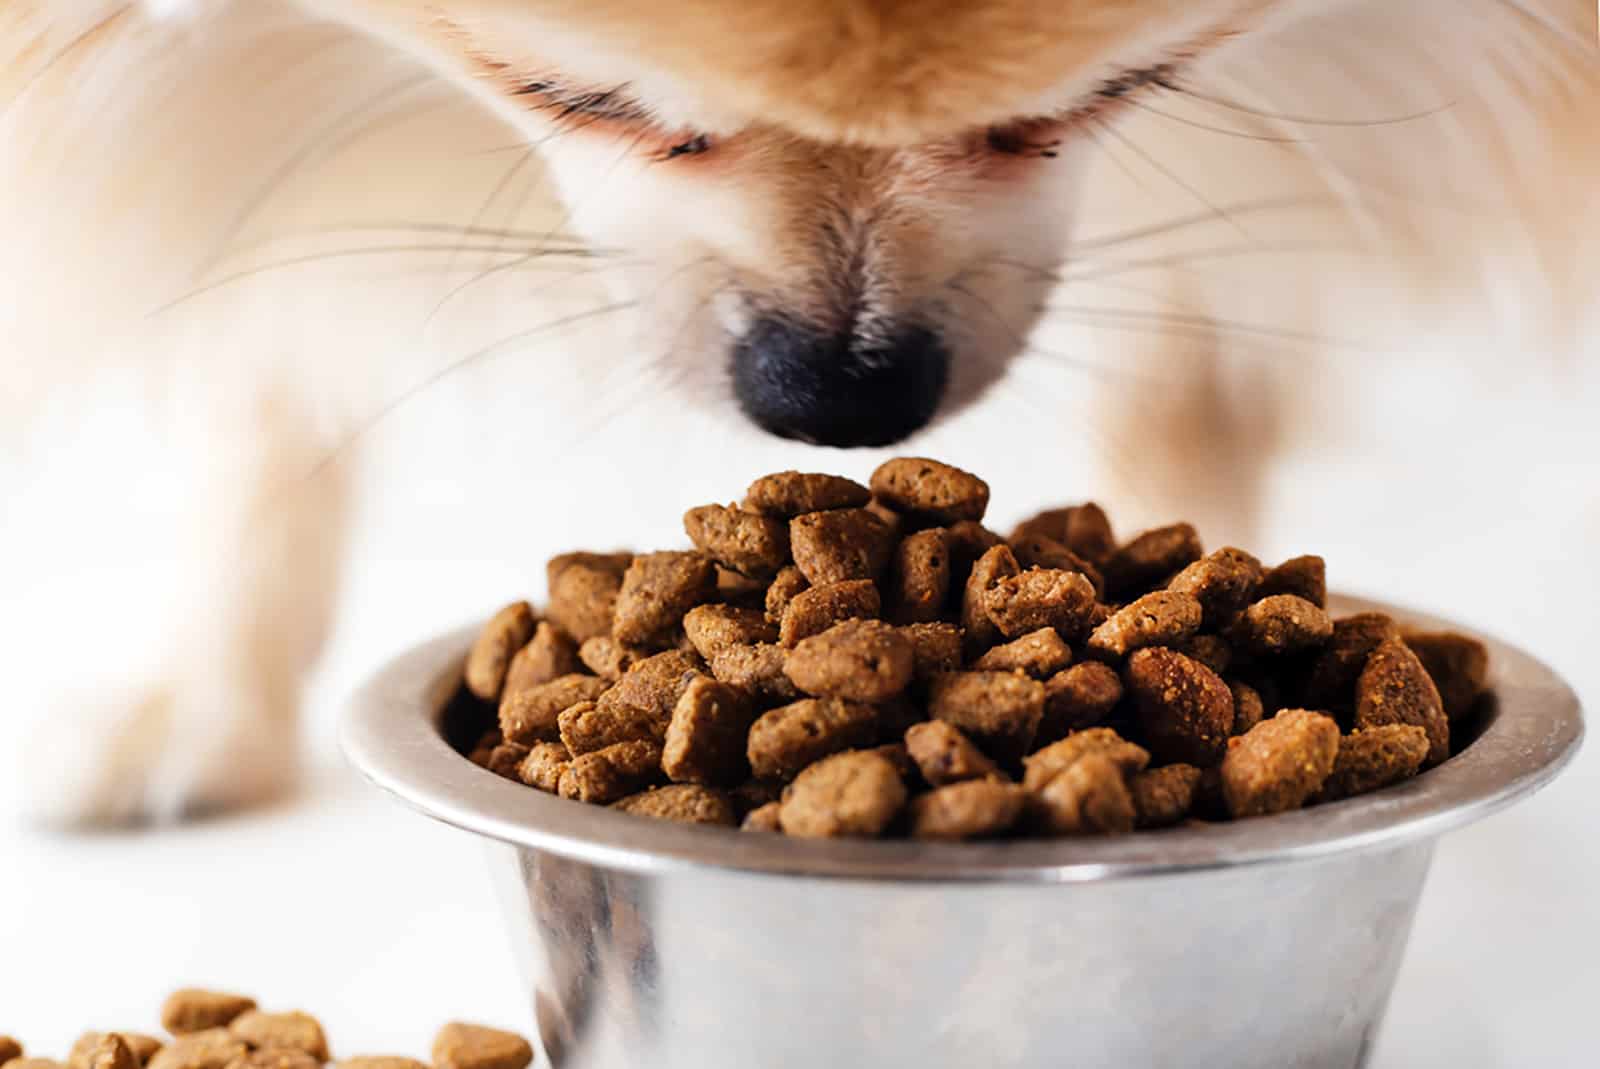 a pomeranian dog eats dog food from a bowl